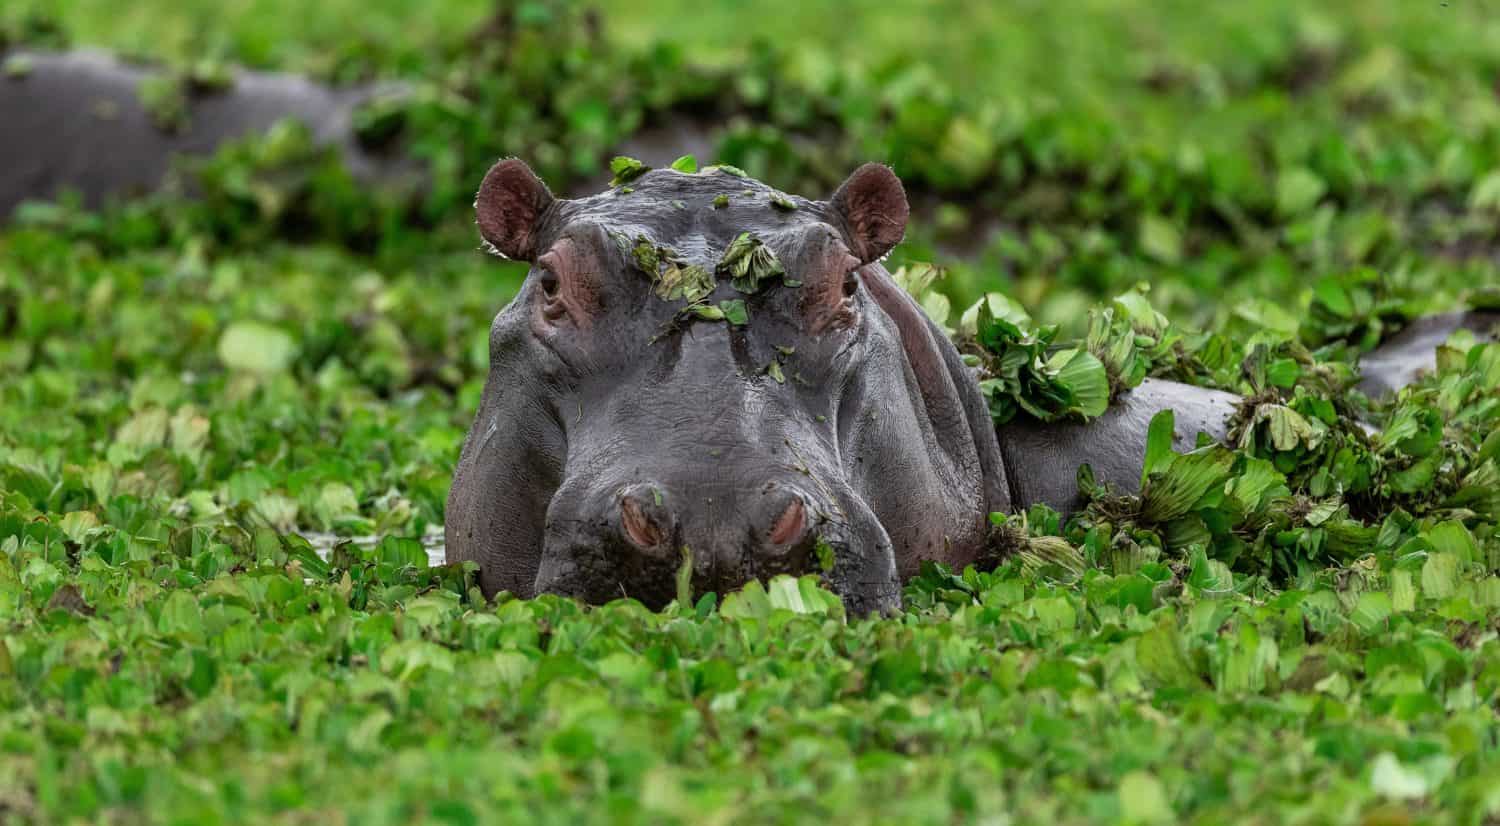 Hippopotamus in green lake water open muzzle. Hippo waiting food in zoo. Specie Hippopotamus amphibius family of Hippopotamidae. Animal in nature water habitat close up. African Hippopotamus wildlife